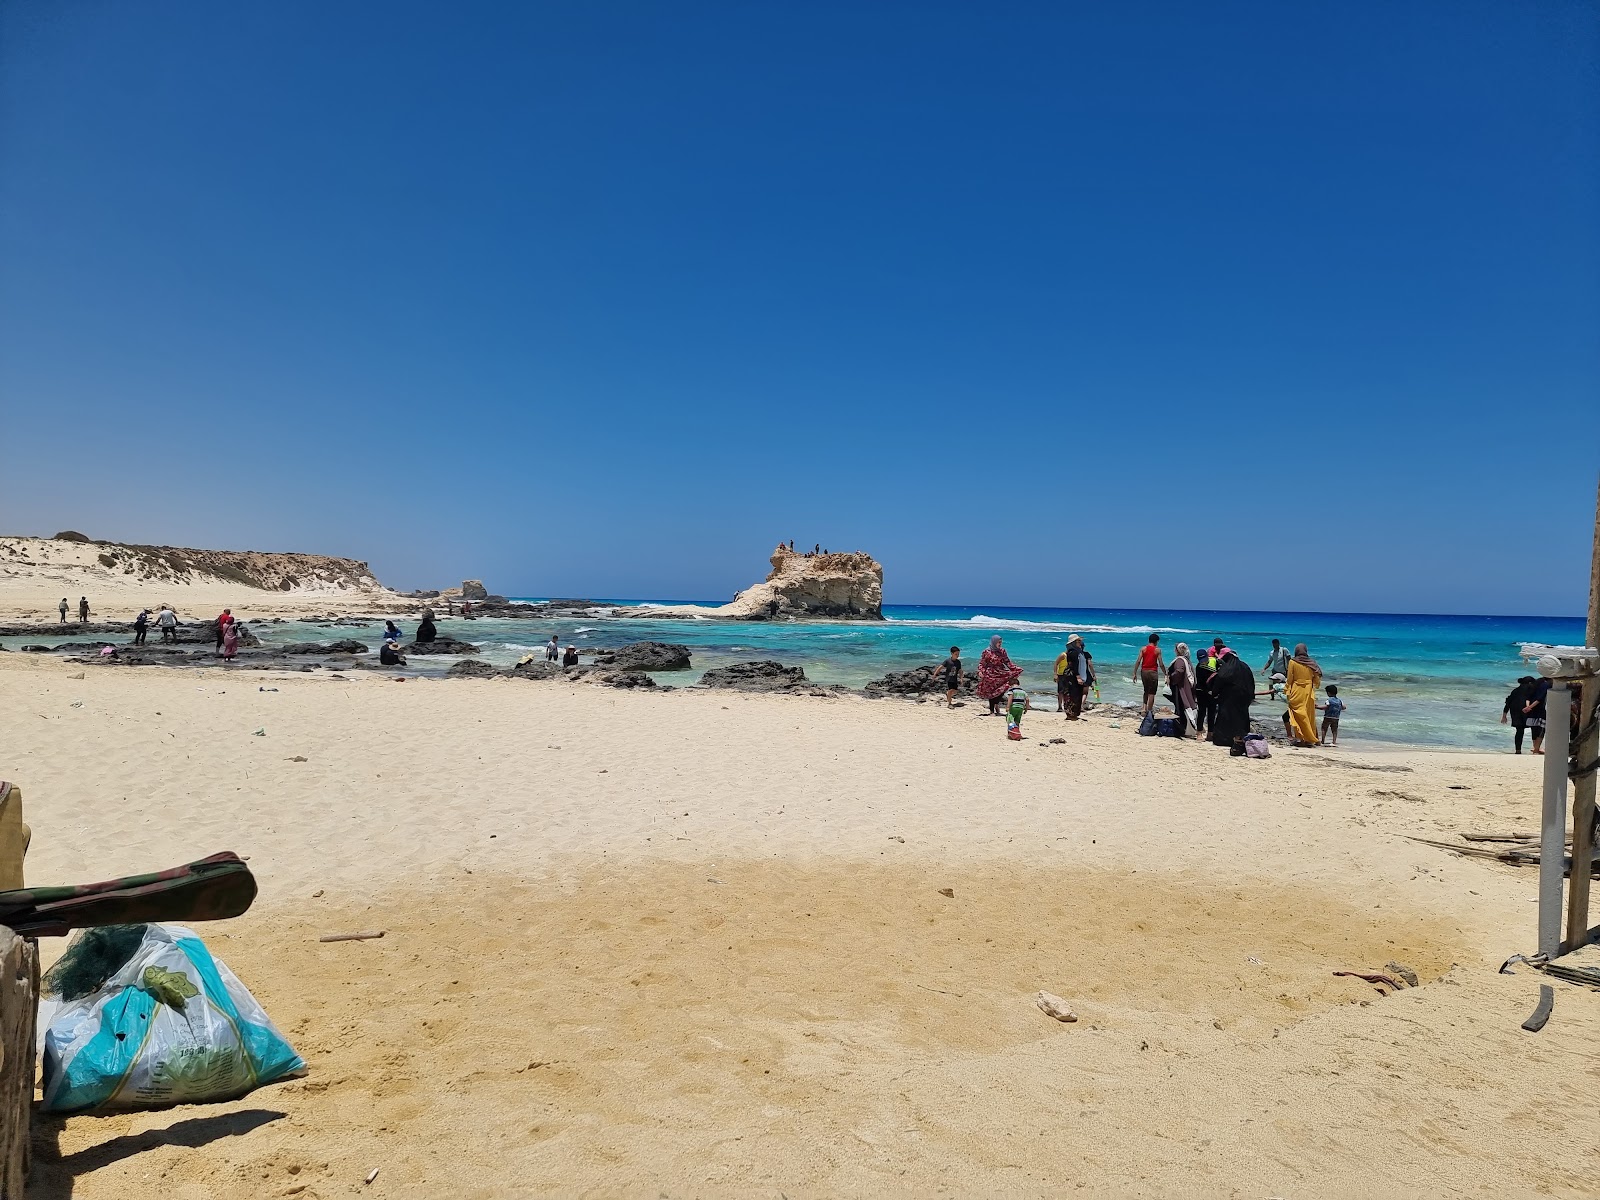 Fotografie cu Cleopatra Bath Beach - locul popular printre cunoscătorii de relaxare